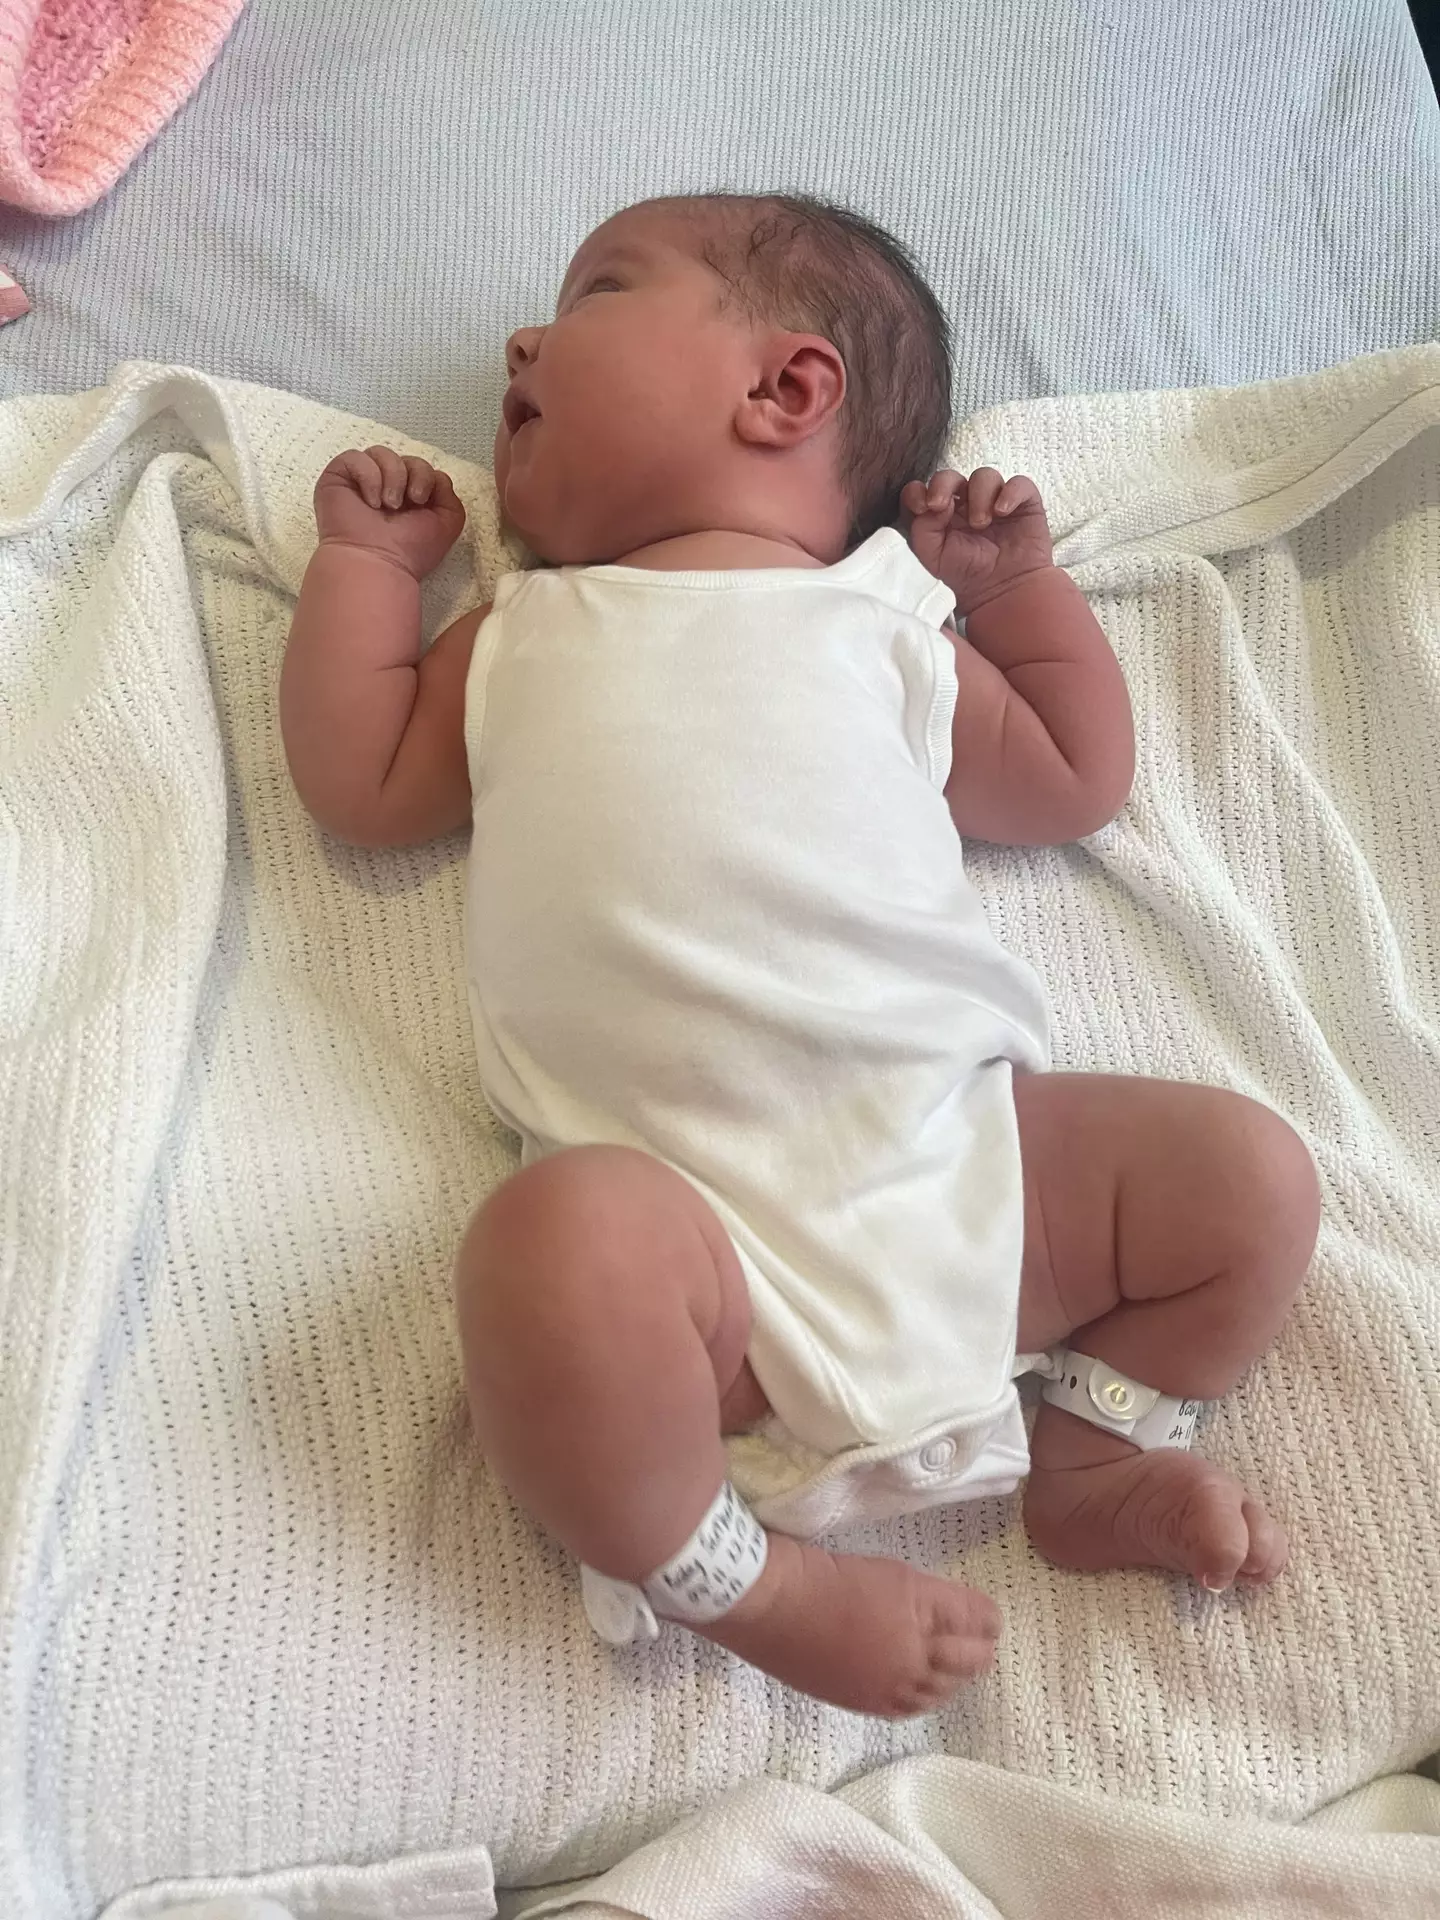 Baby Amelia was born on 27 November last year.